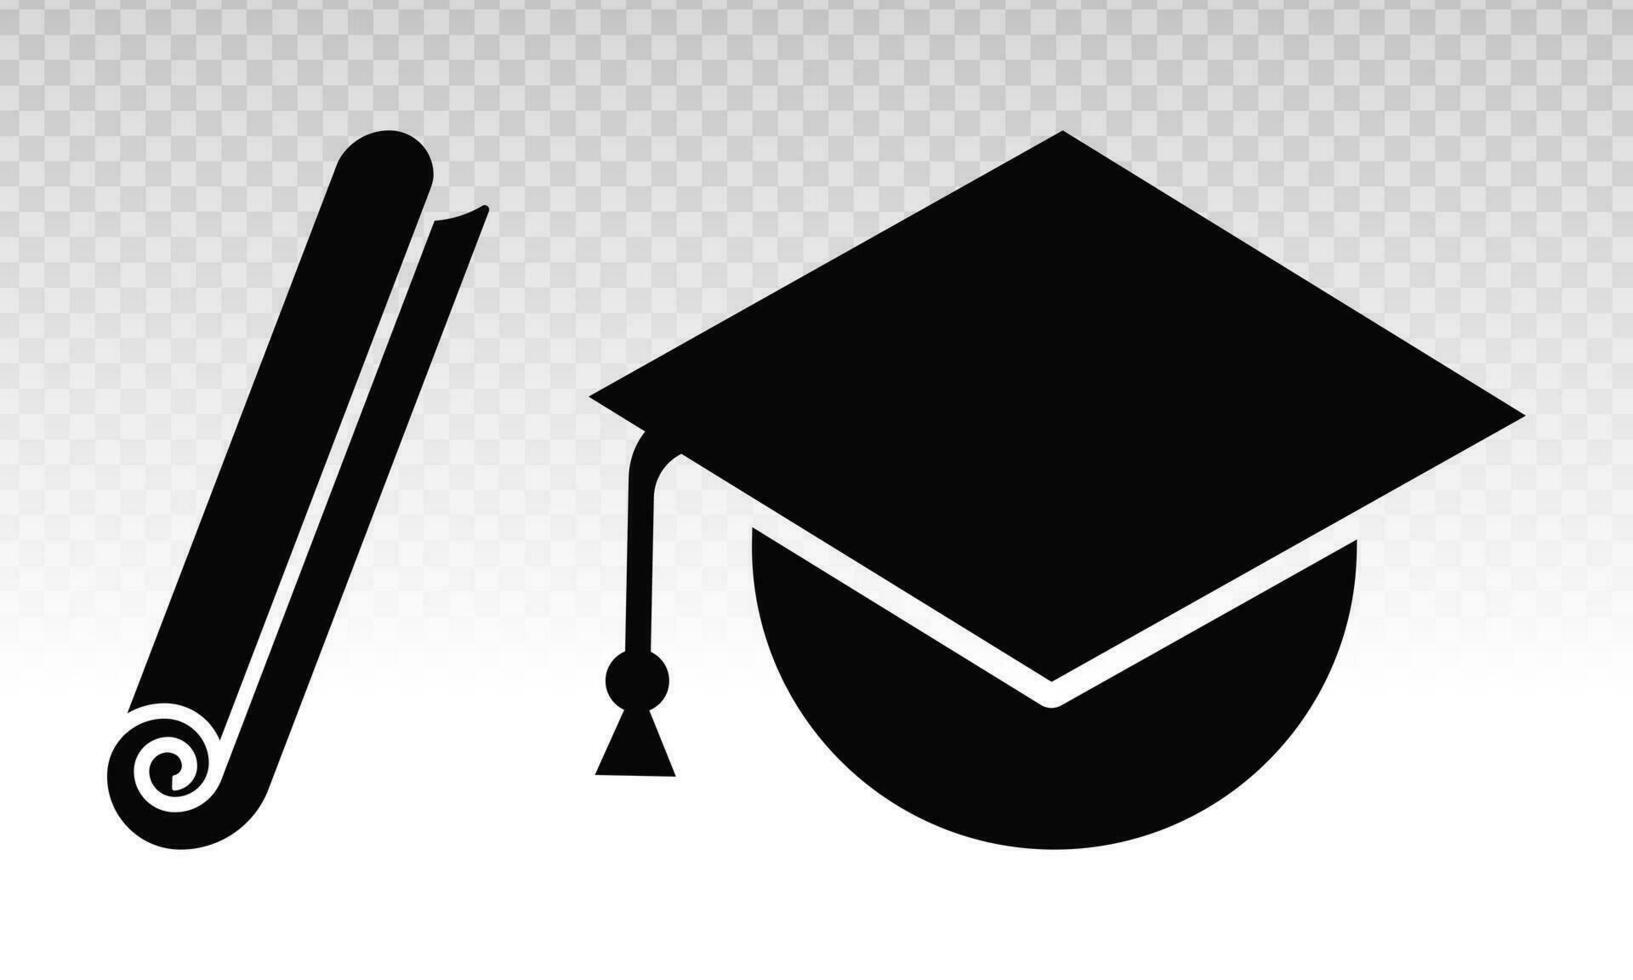 Graduation hat cap or mortarboard flat icon vector